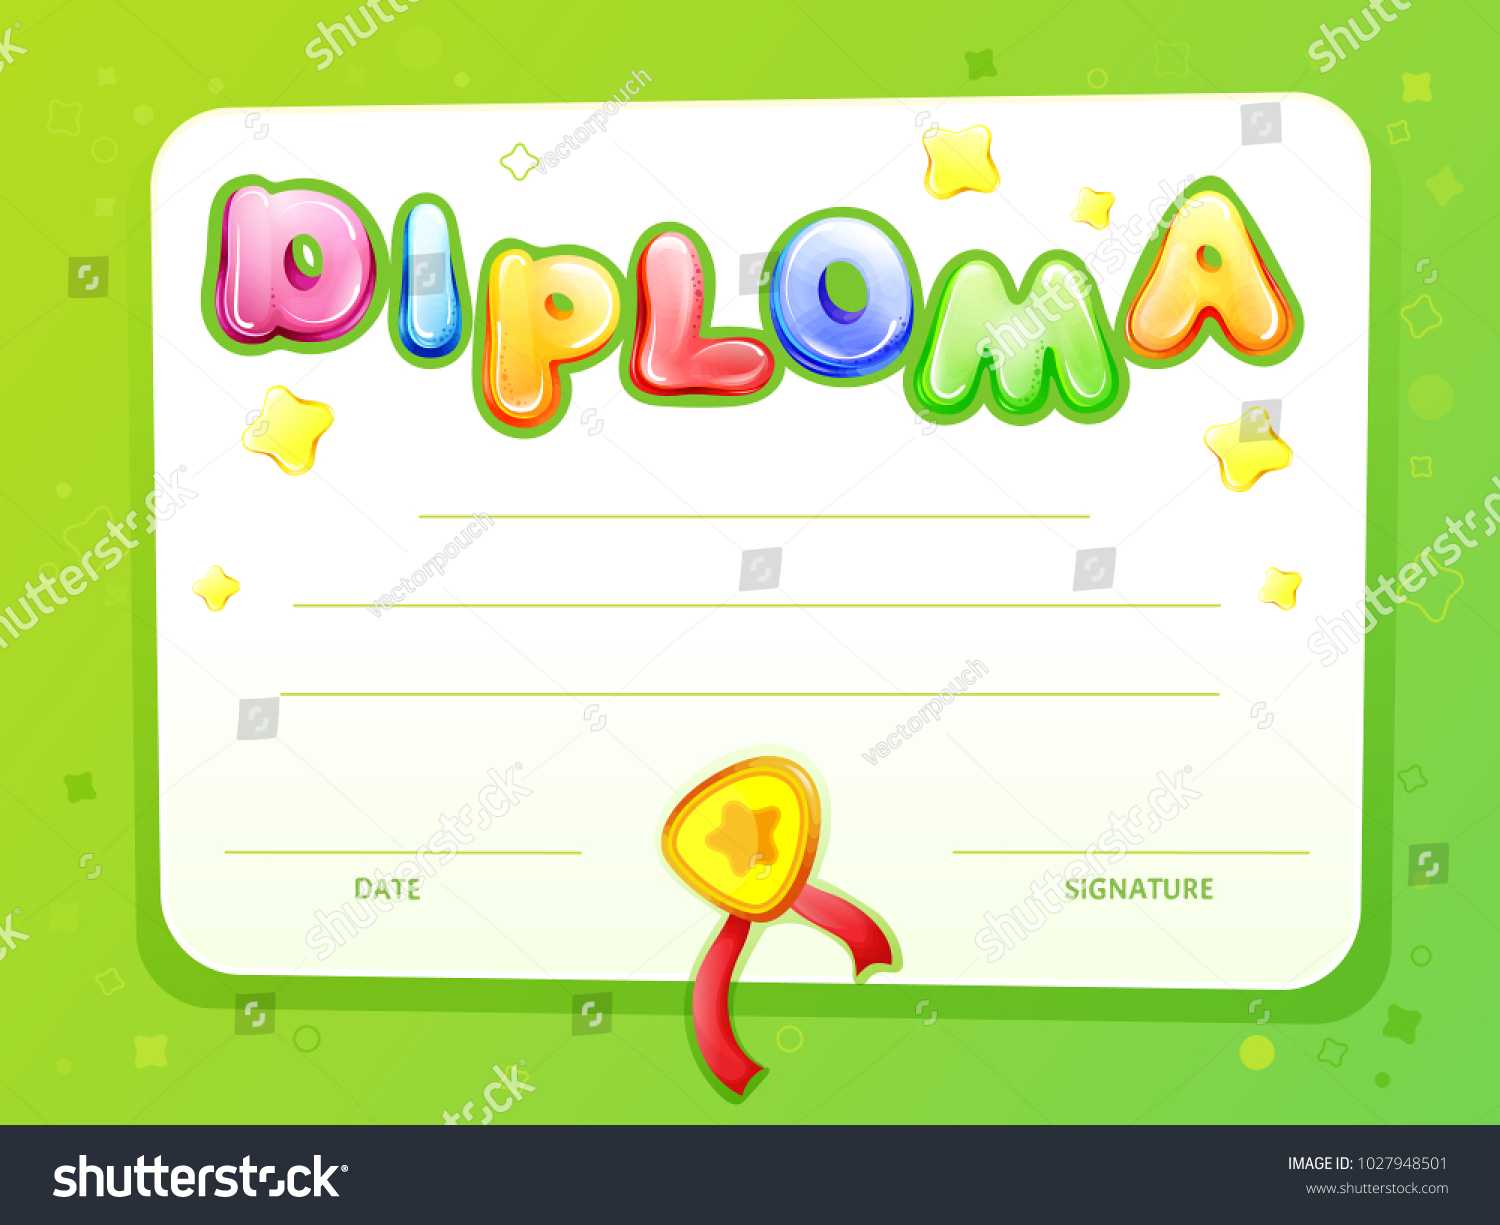 Стоковая Векторная Графика «Cartoon Kids Certificate Diploma Throughout Certificate Of Achievement Template For Kids